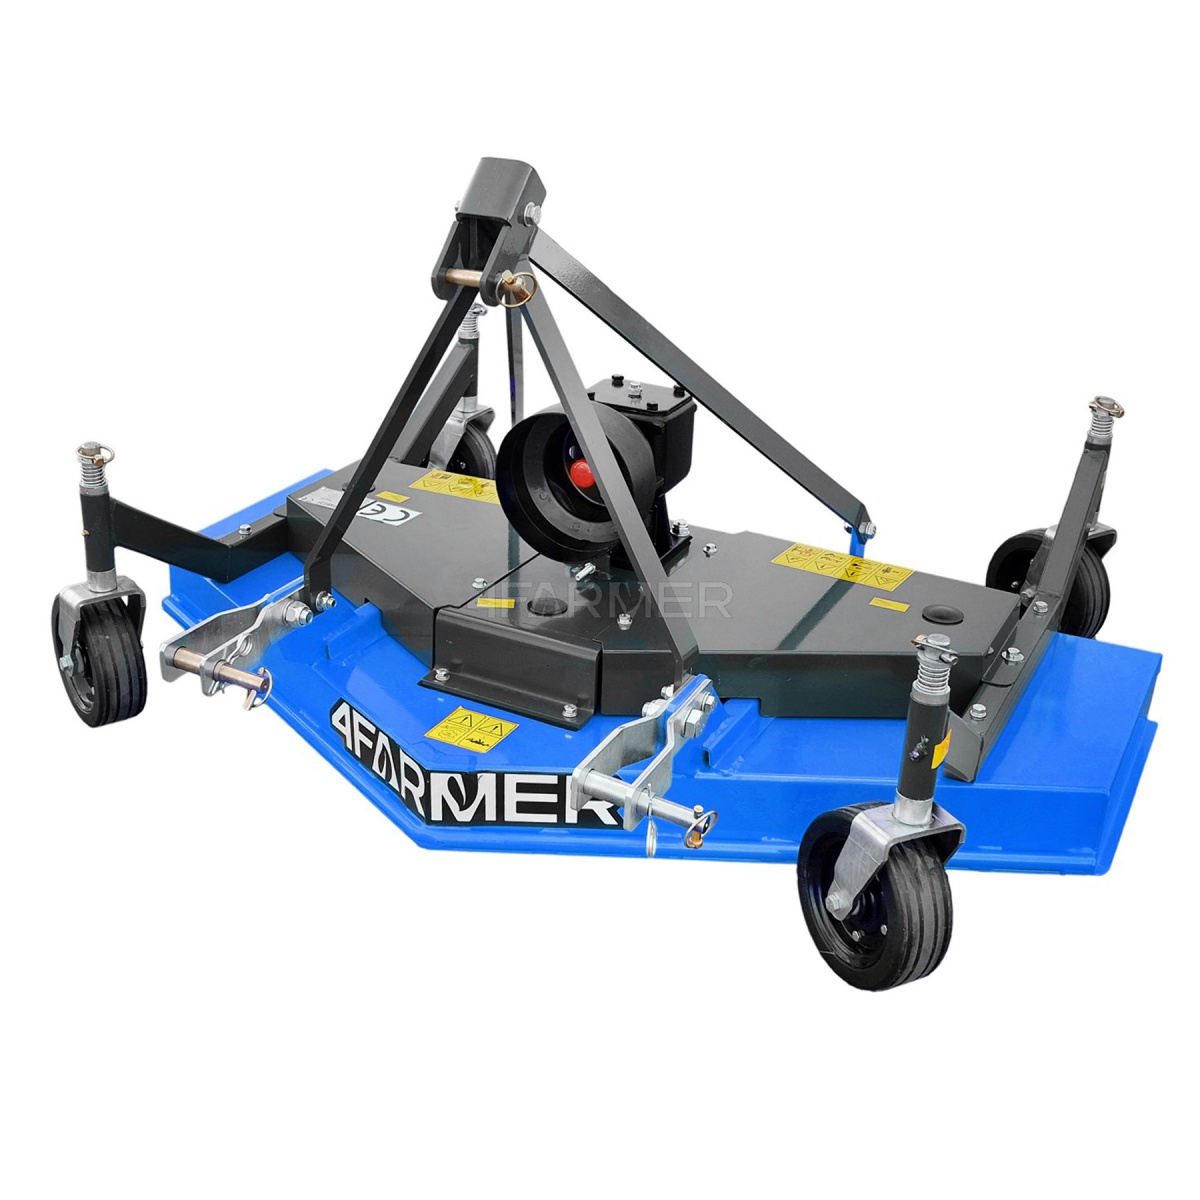 4farmer - Maintenance mower FMK 150 4FARMER - blue